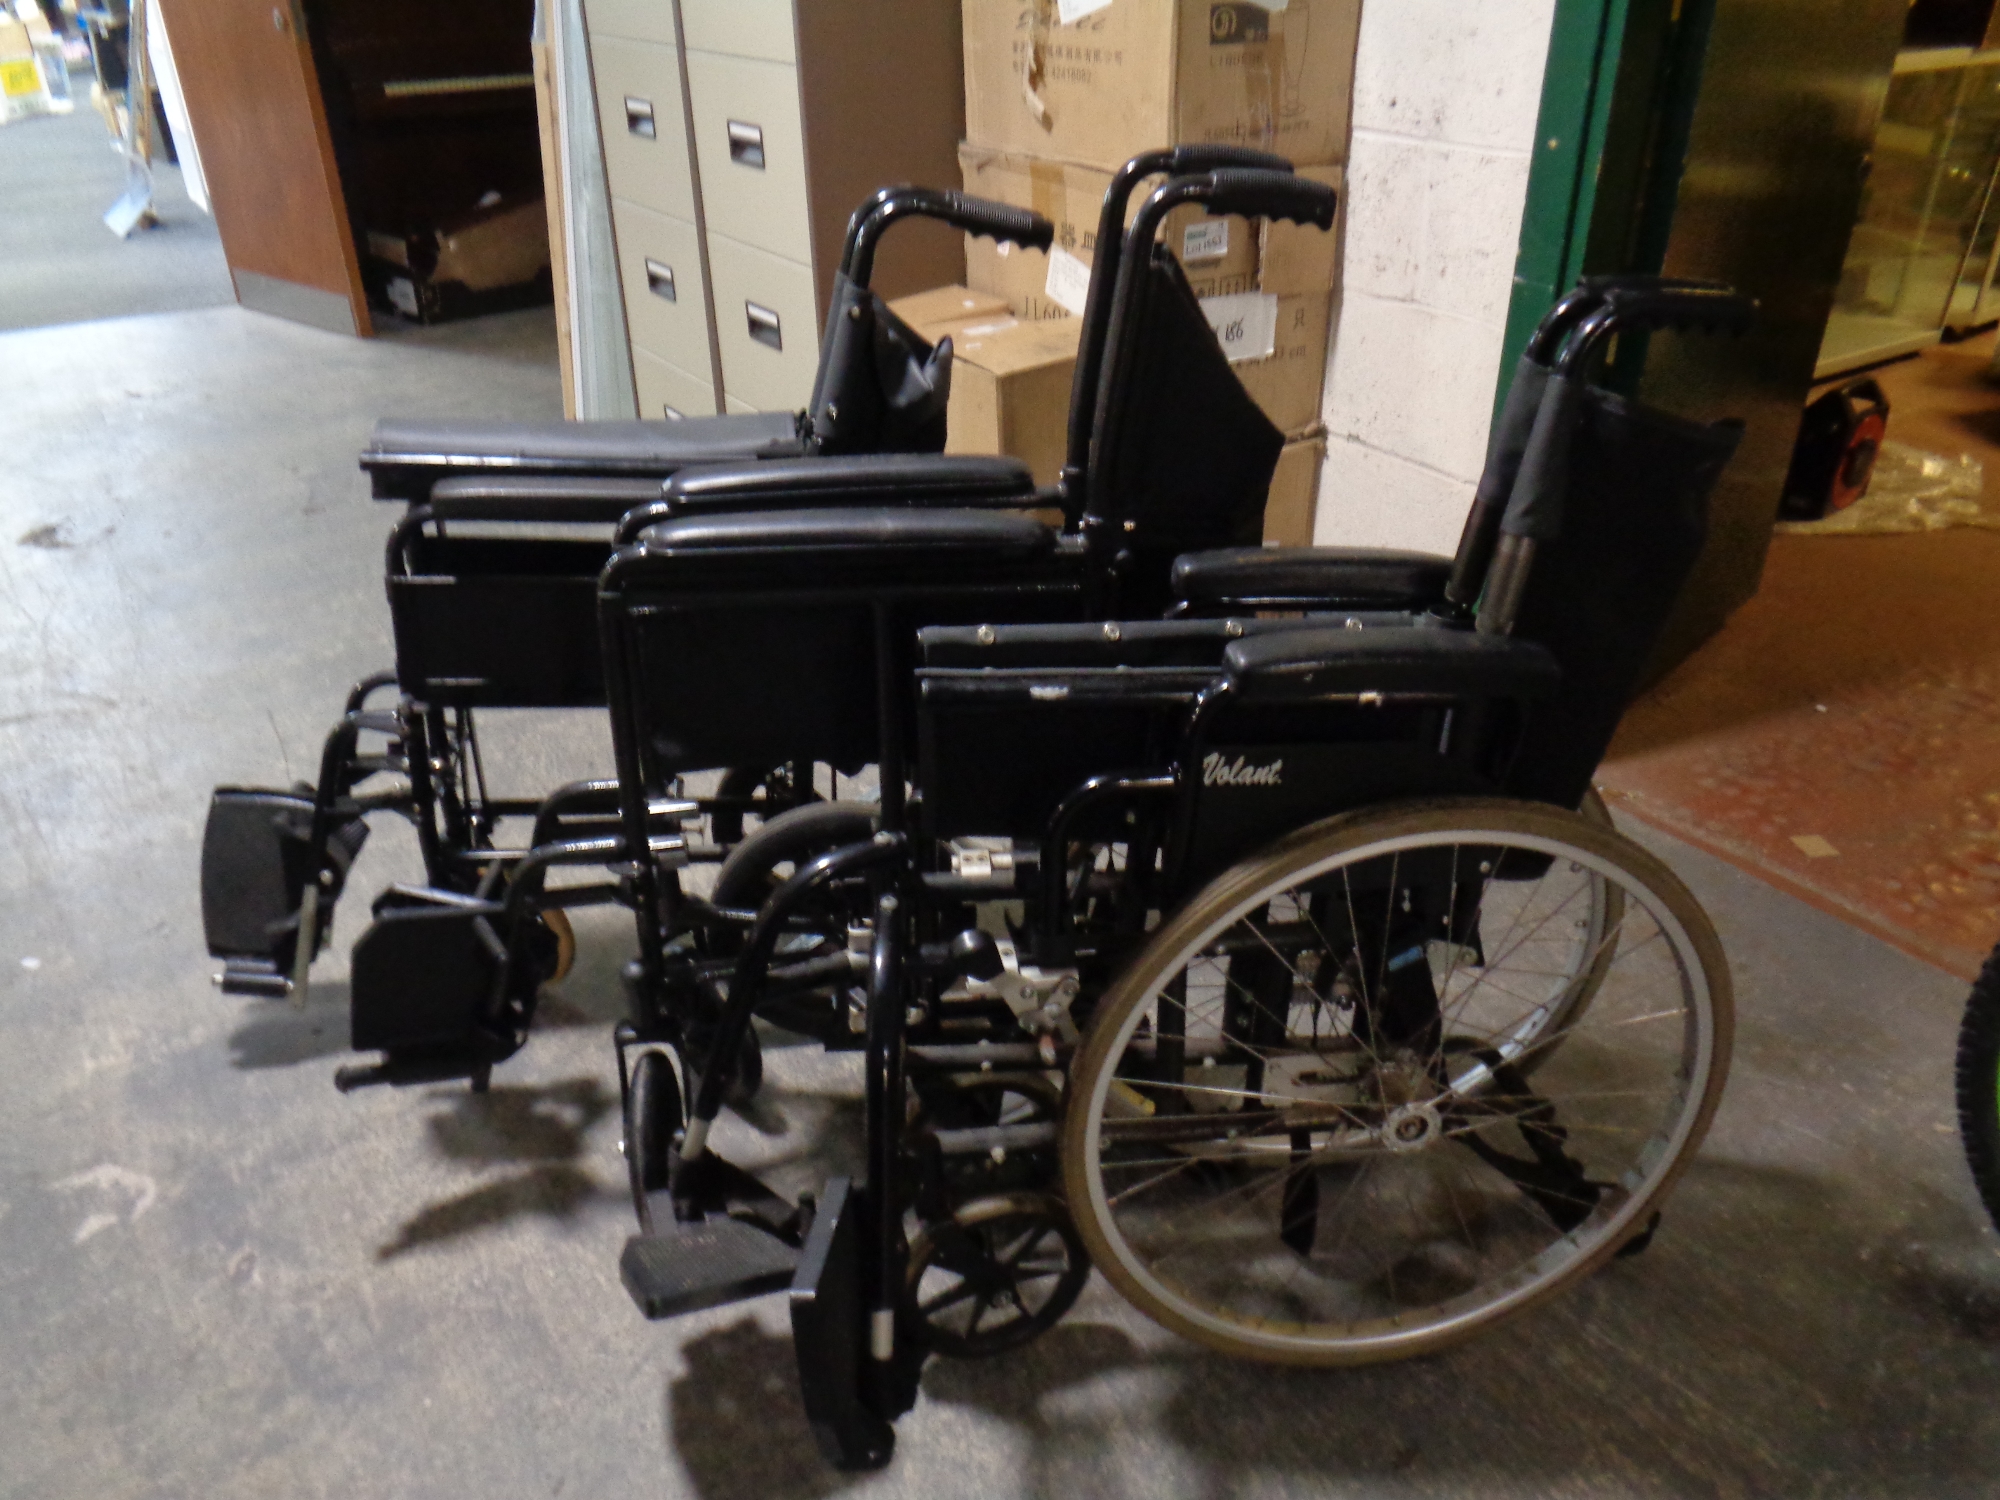 Three folding wheelchairs